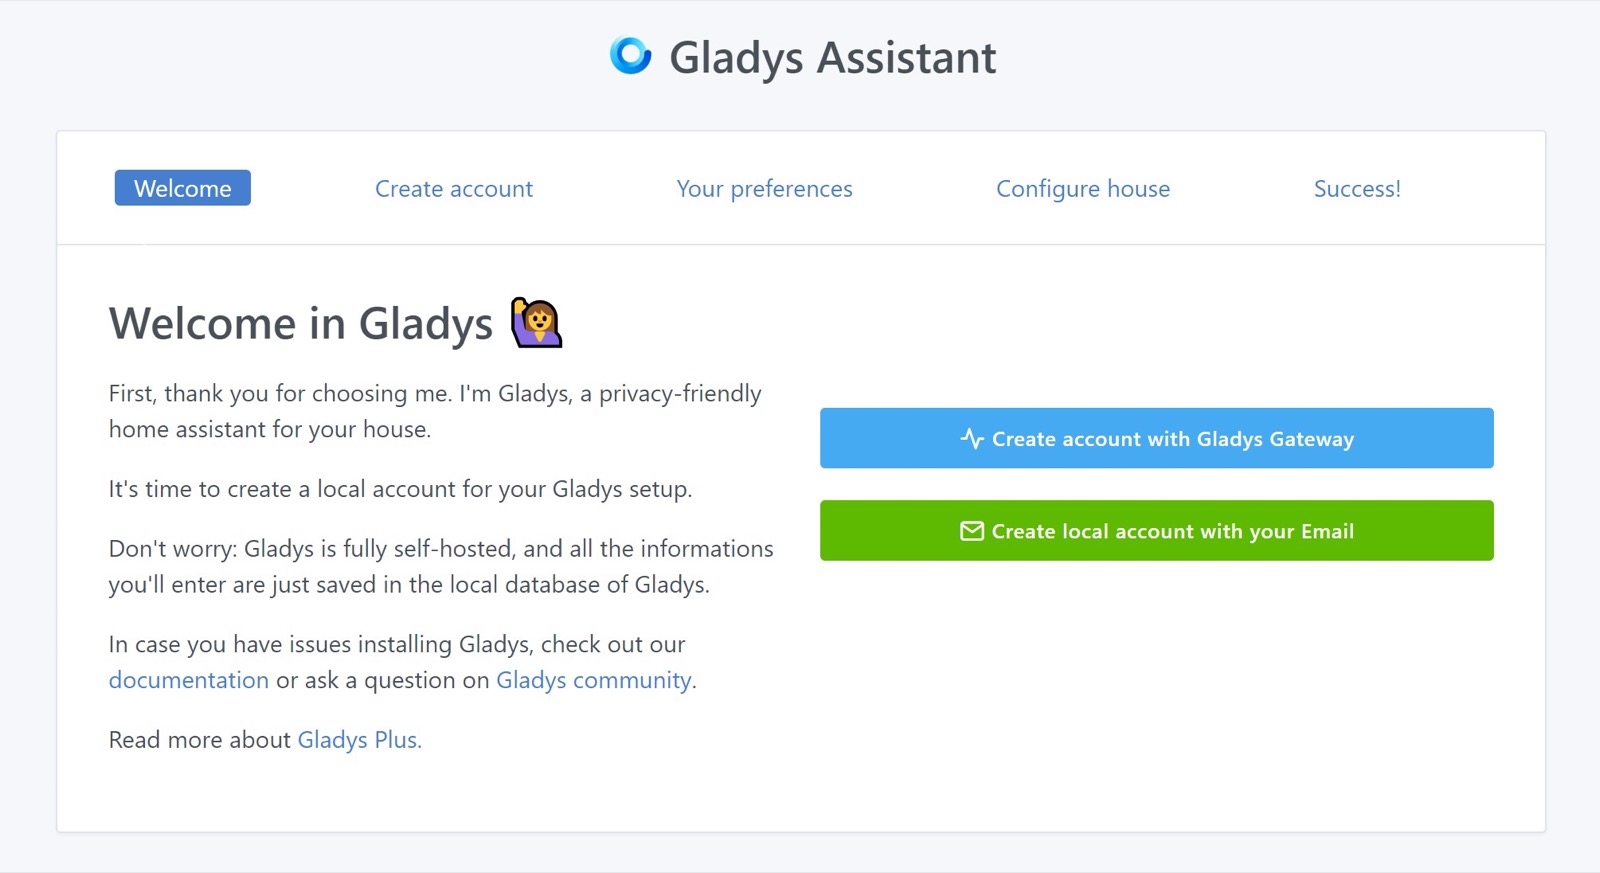 Accessing Gladys